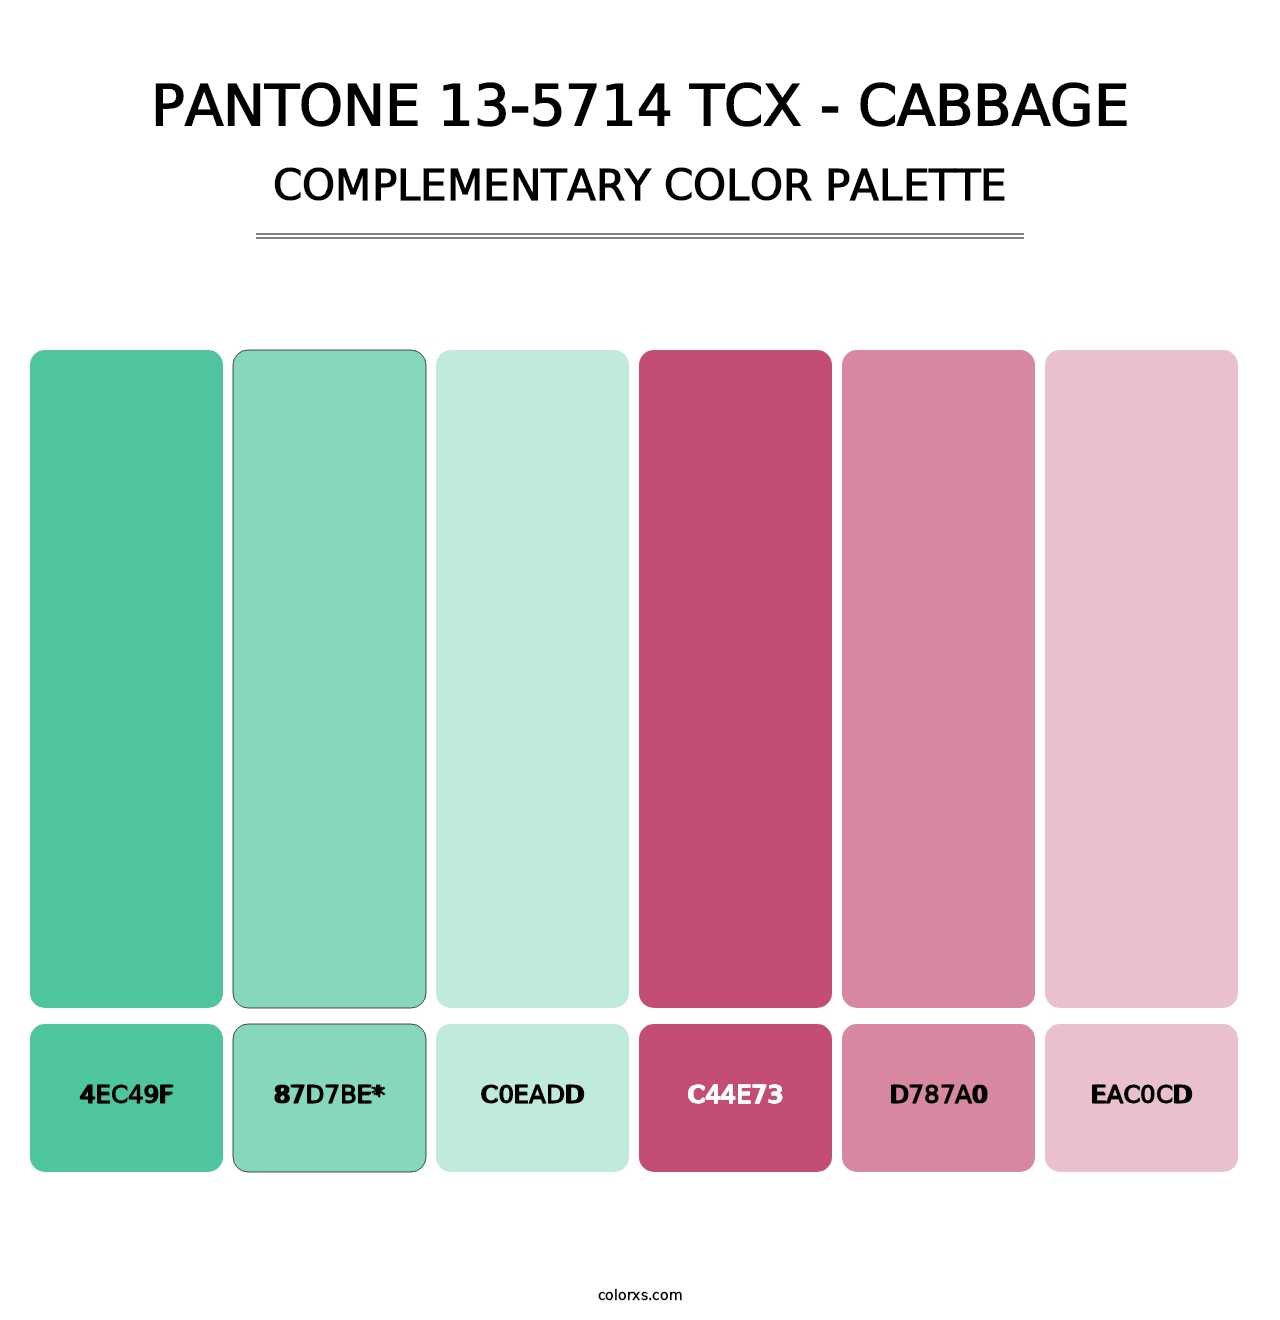 PANTONE 13-5714 TCX - Cabbage - Complementary Color Palette